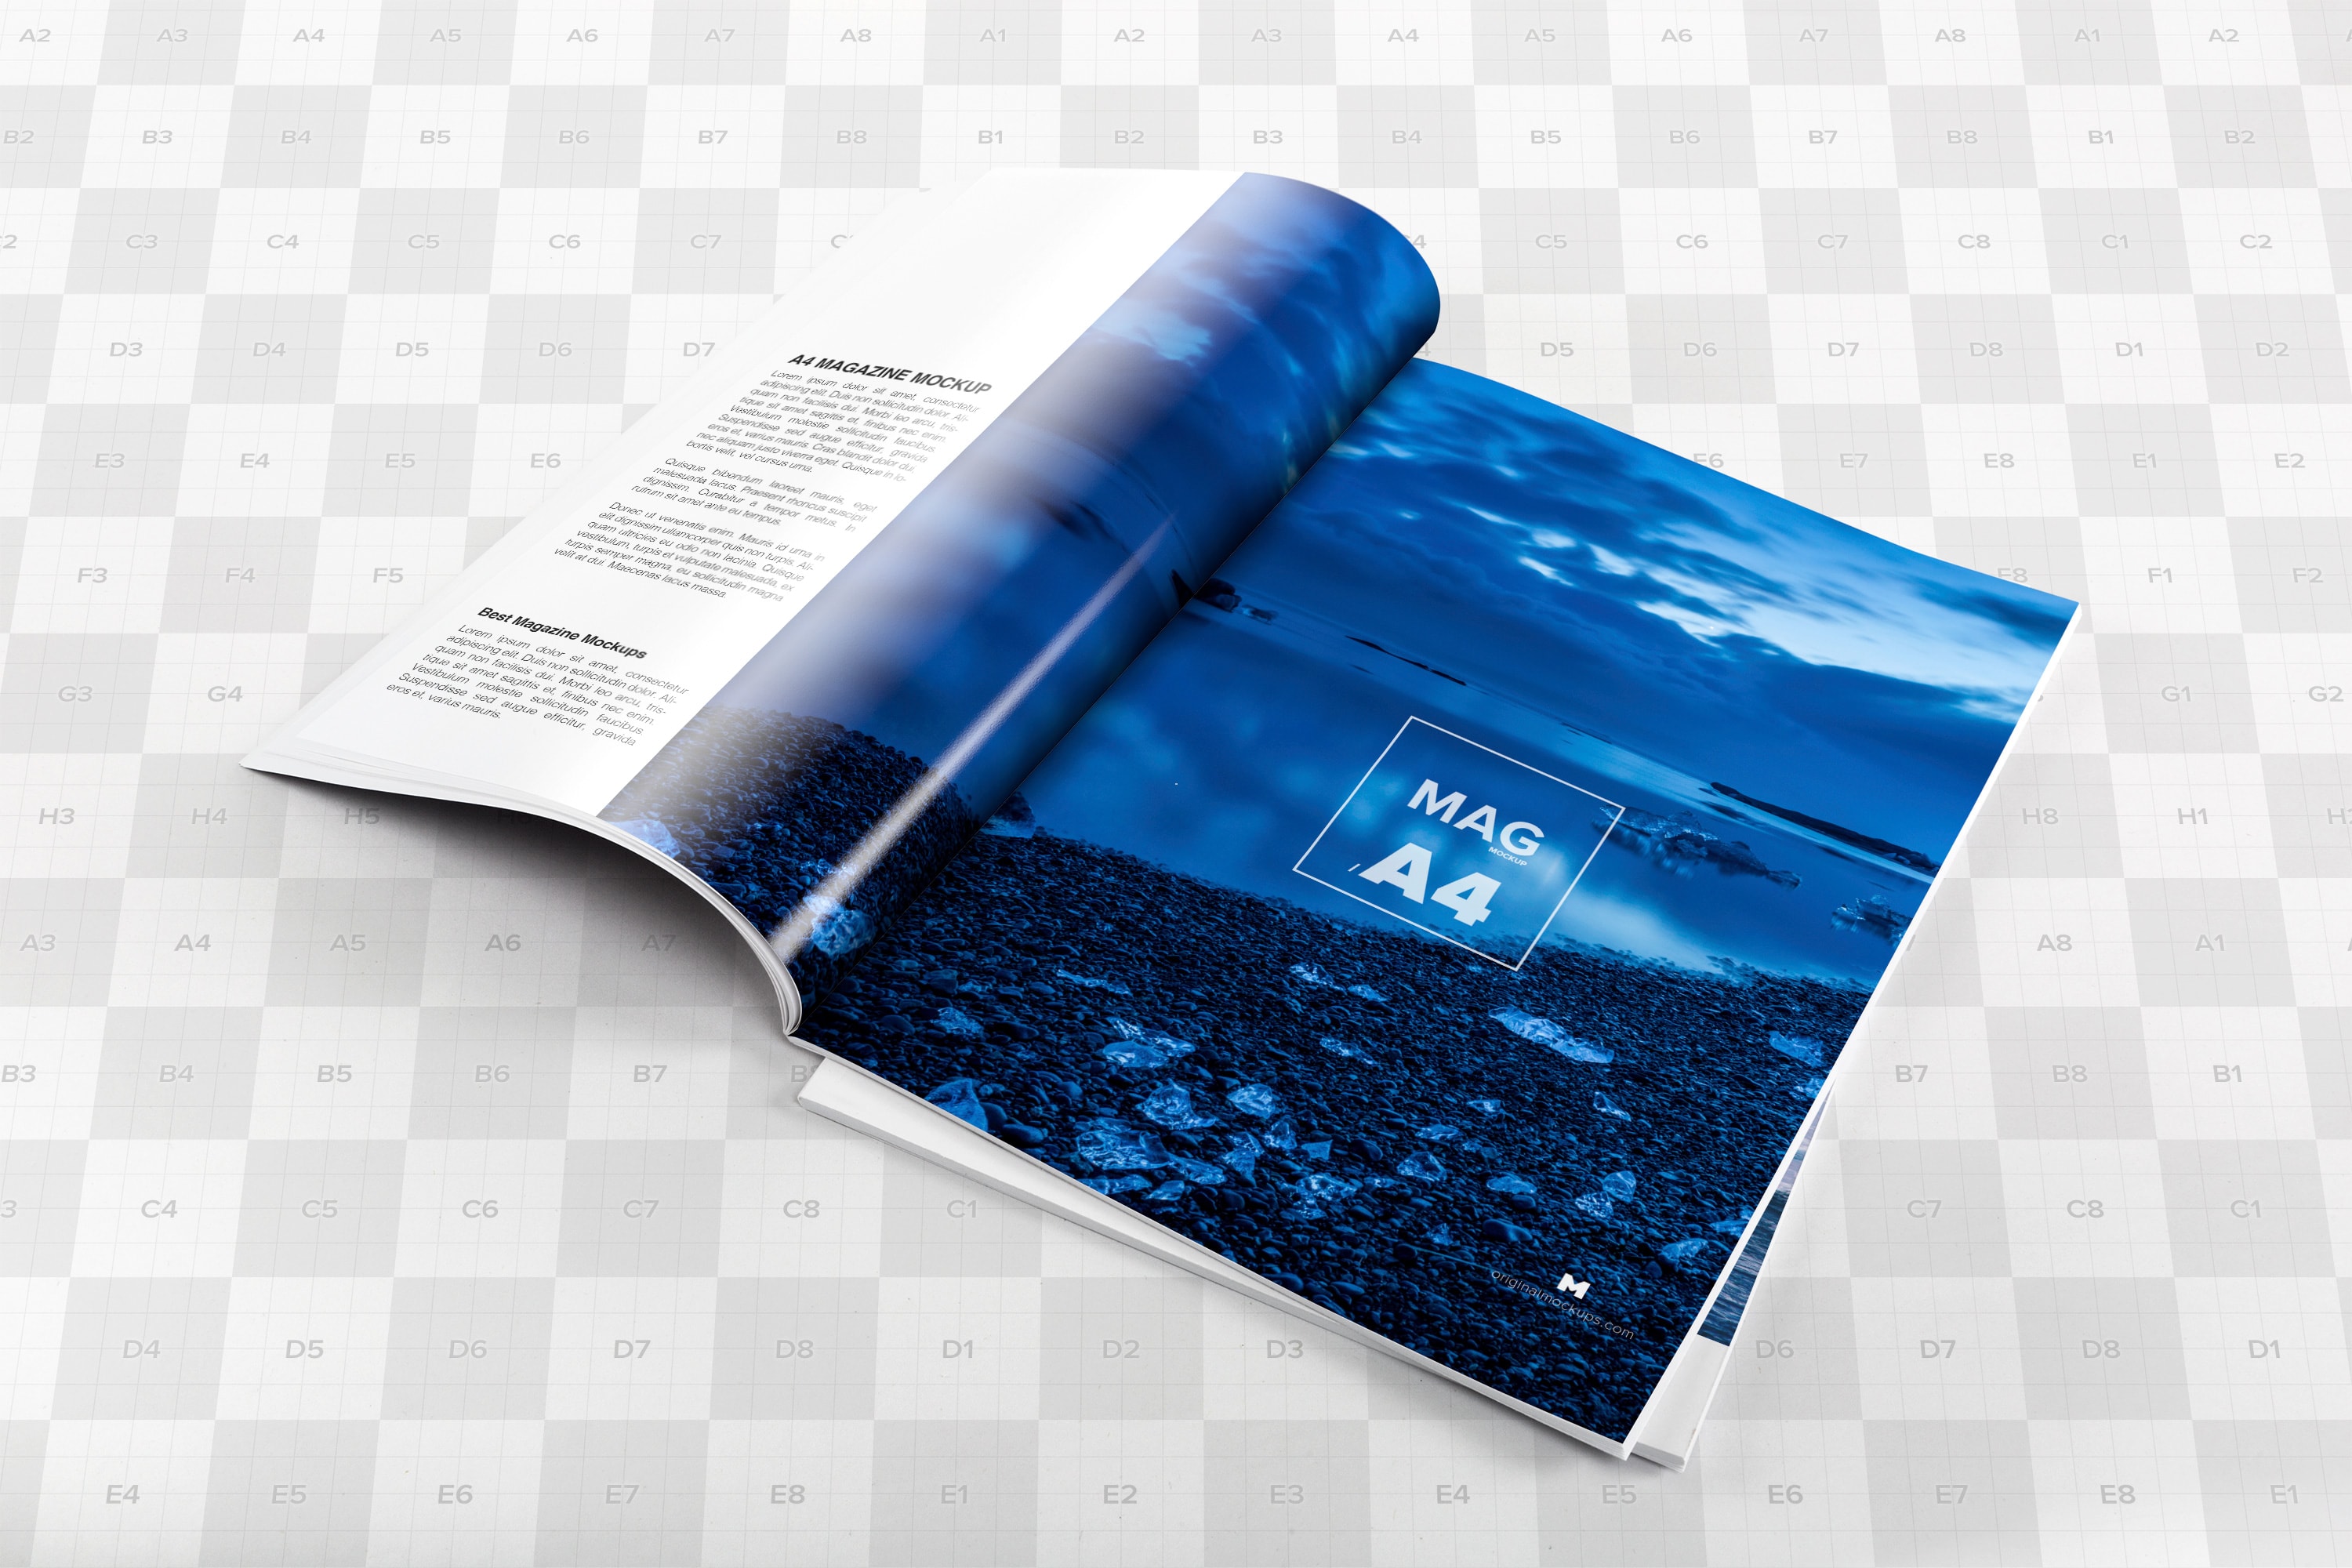 A4尺寸大小高端杂志内页排版设计效果图样机 A4 Magazine Spread Mockup插图